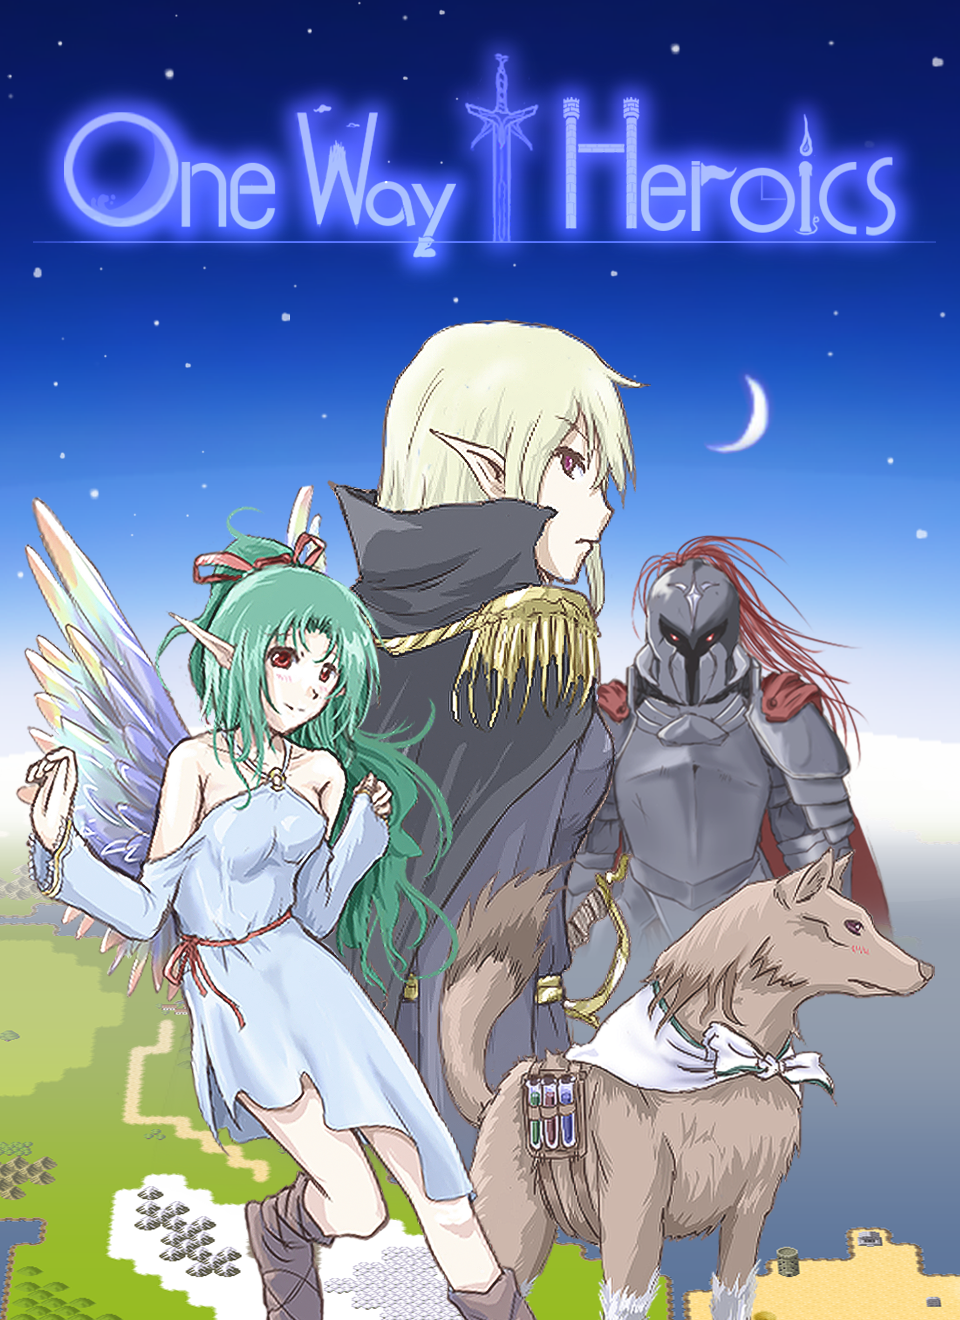 One Way Heroics #13